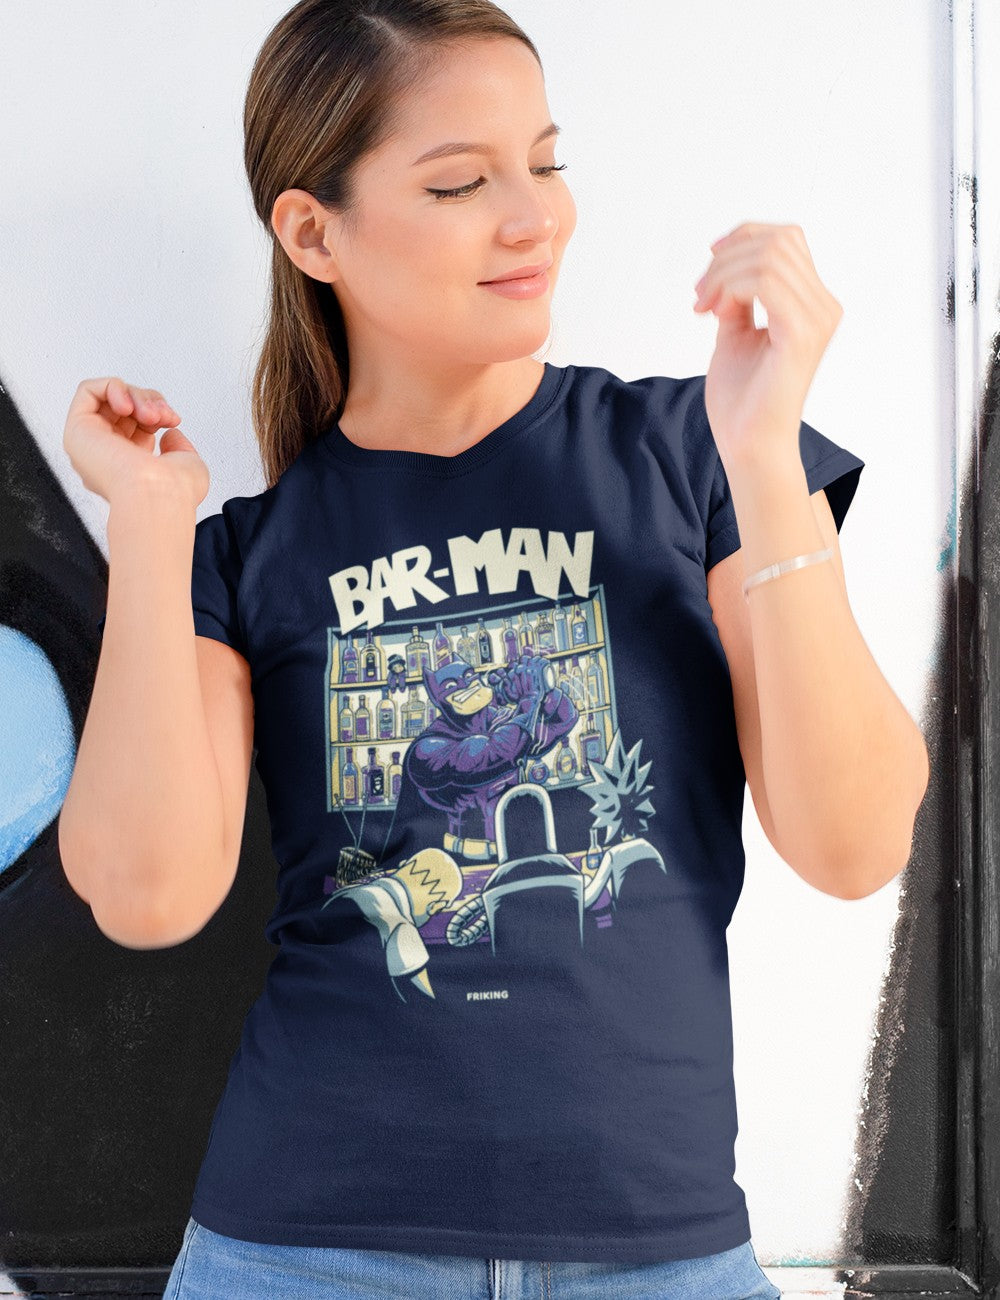 Camiseta mujer batman - Barman